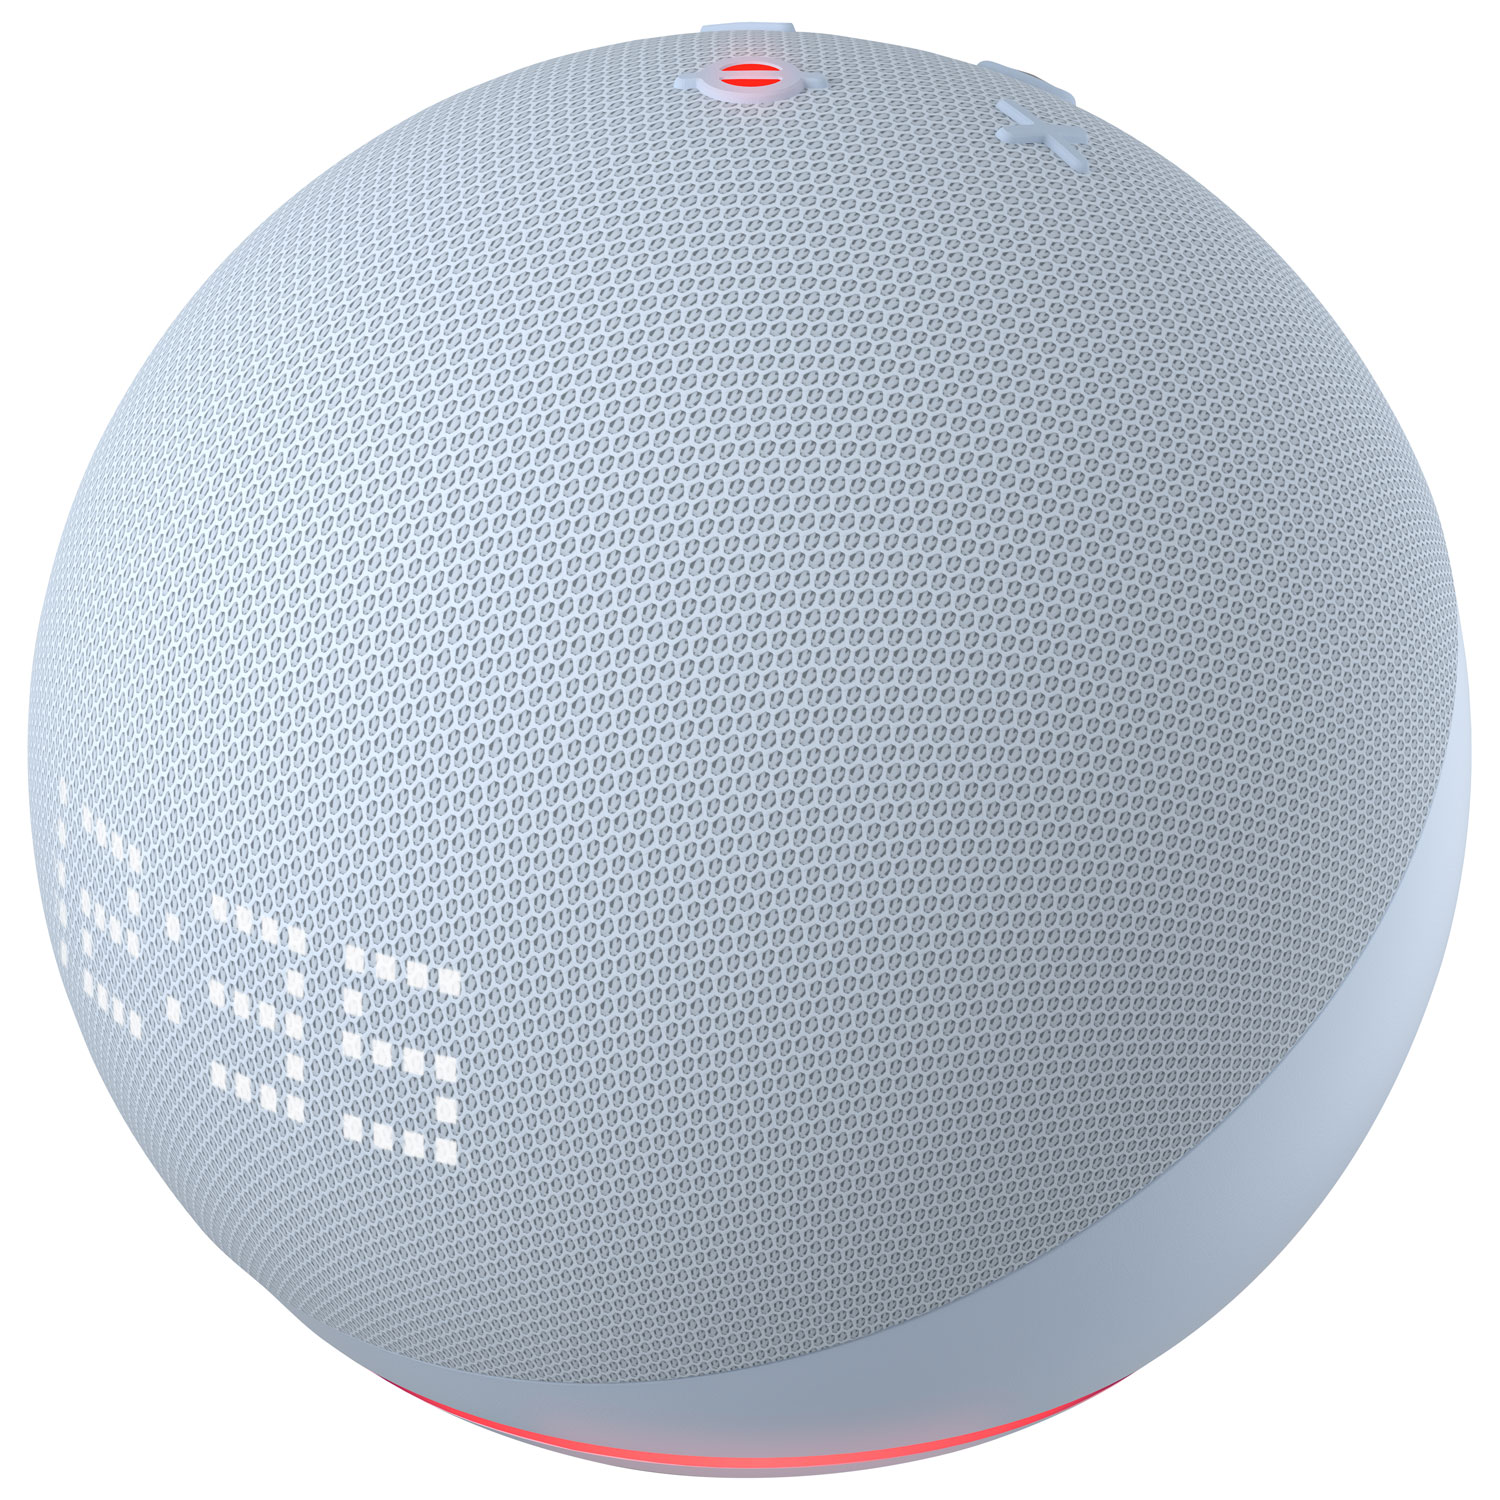 Echo Dot (5th Gen) Smart Speaker with Clock & Alexa - Cloud